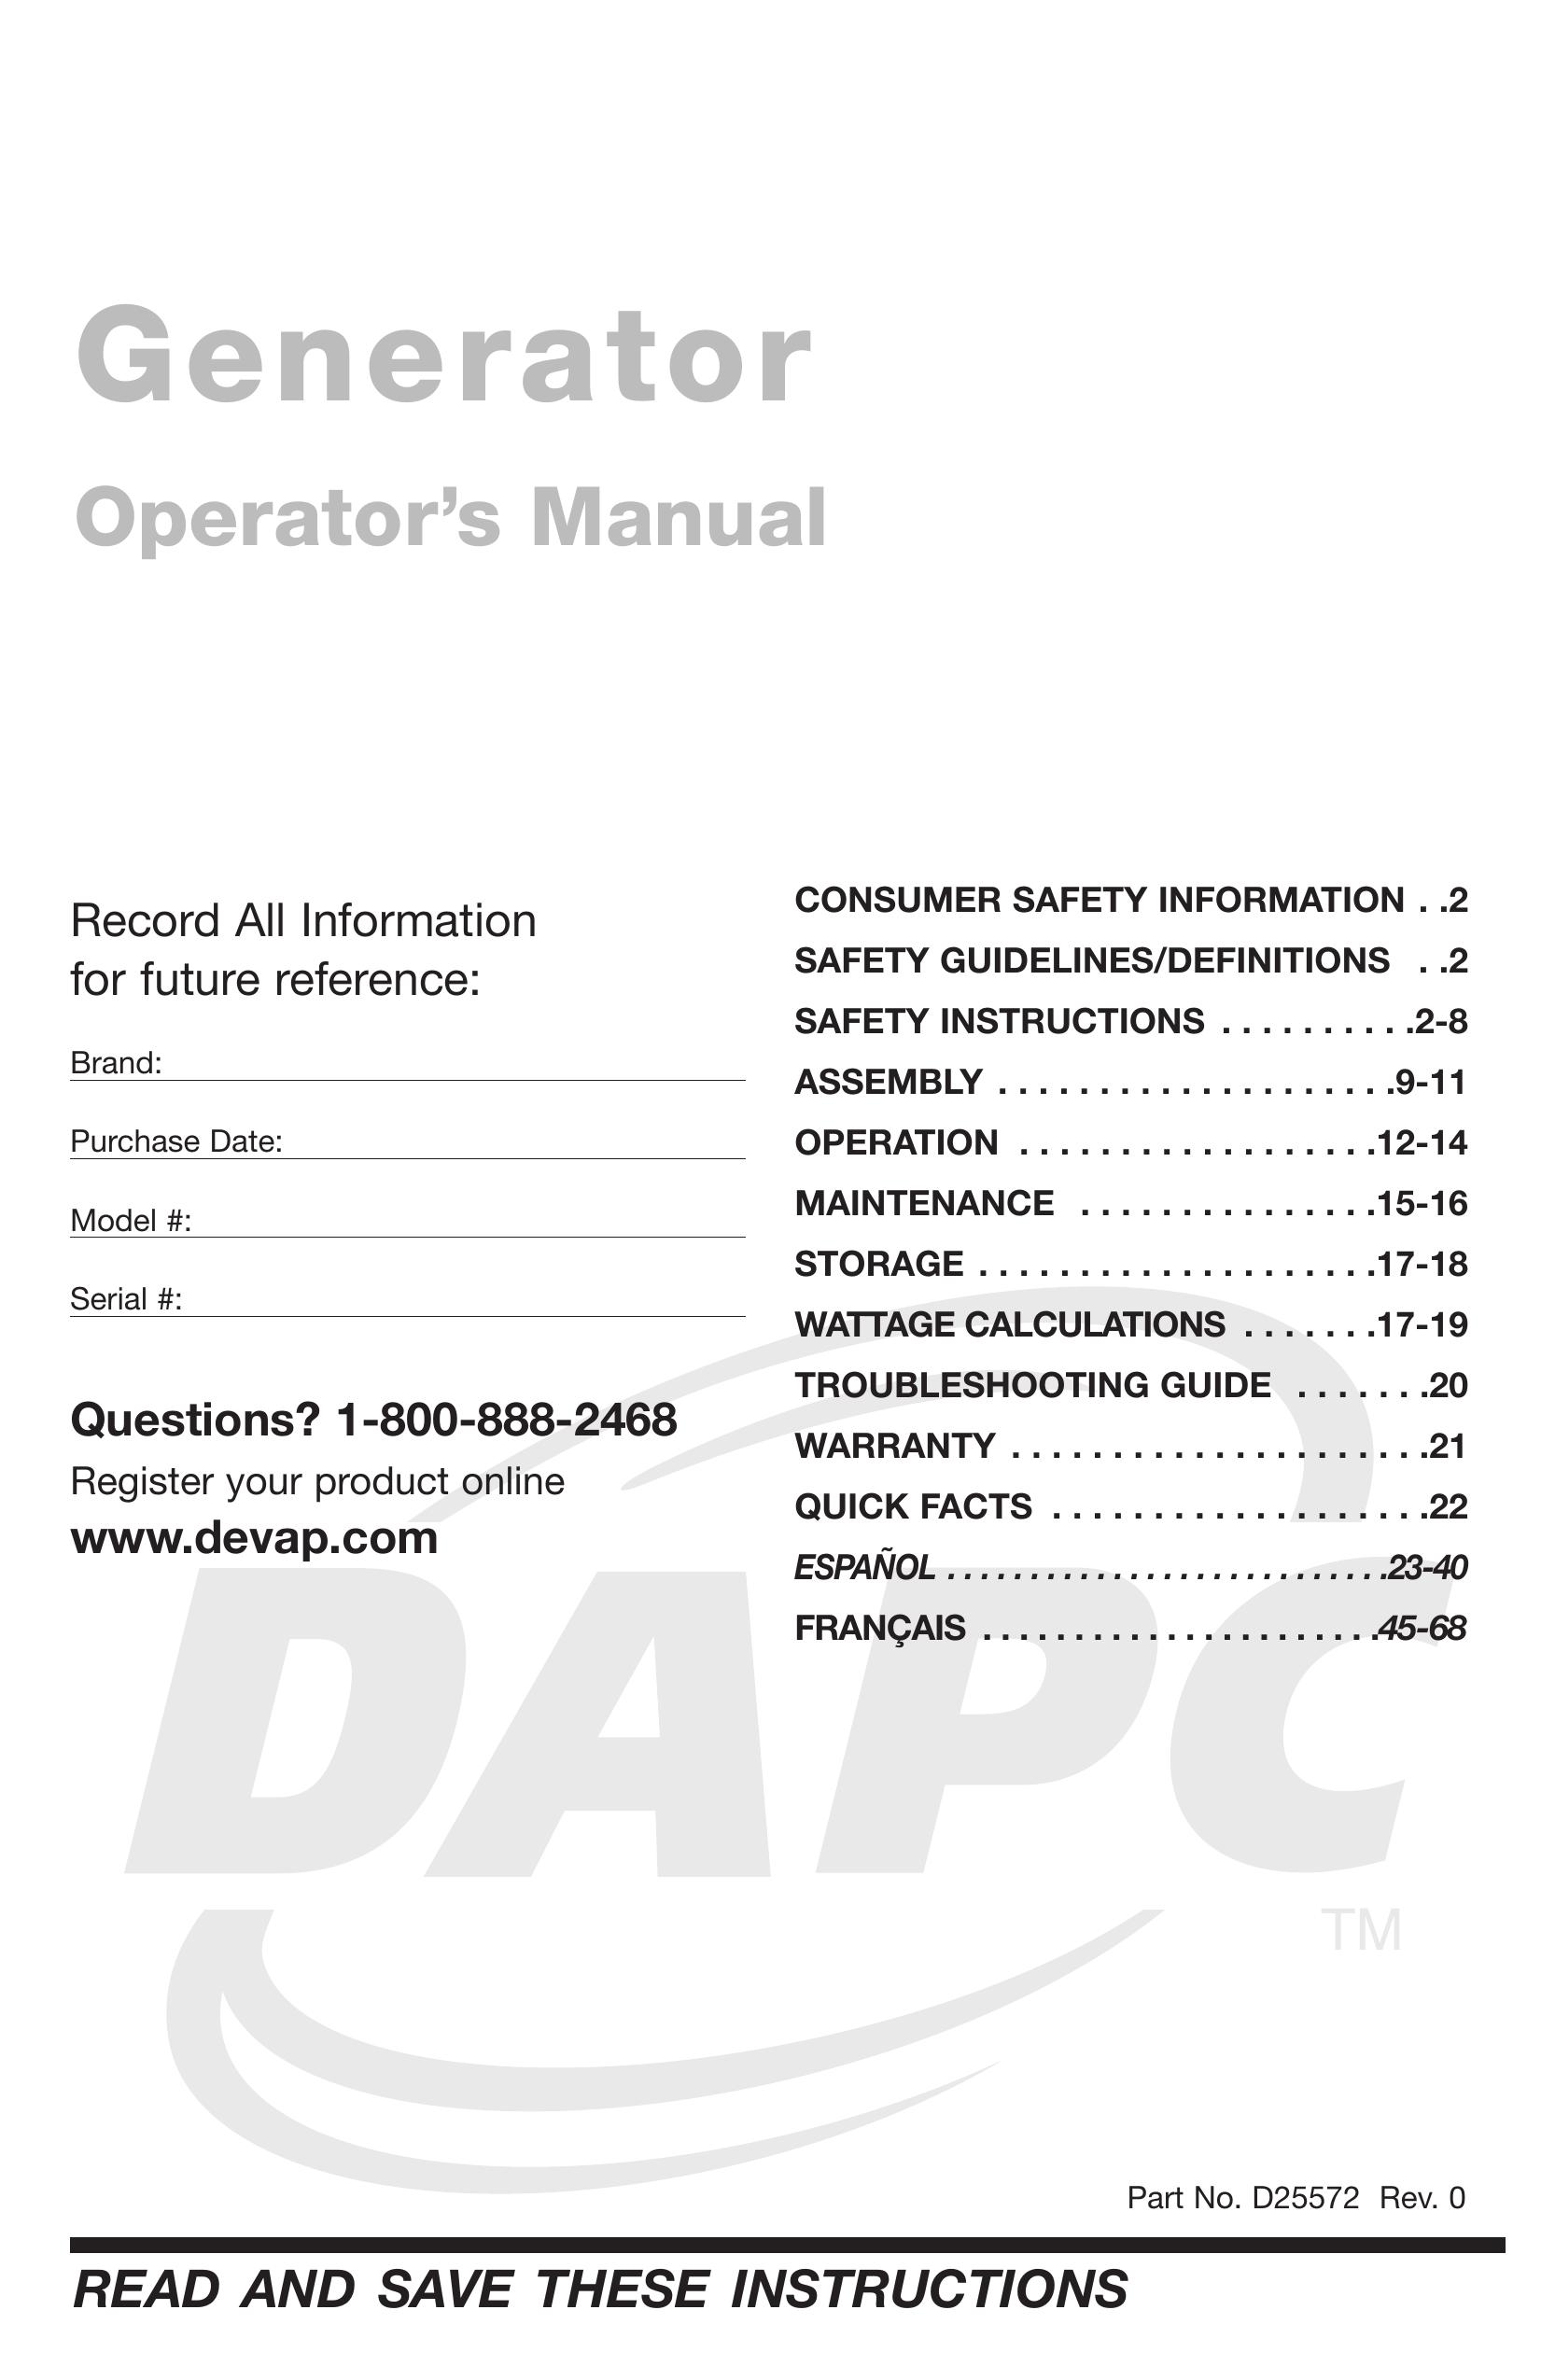 DeVillbiss Air Power Company D25572 Portable Generator User Manual